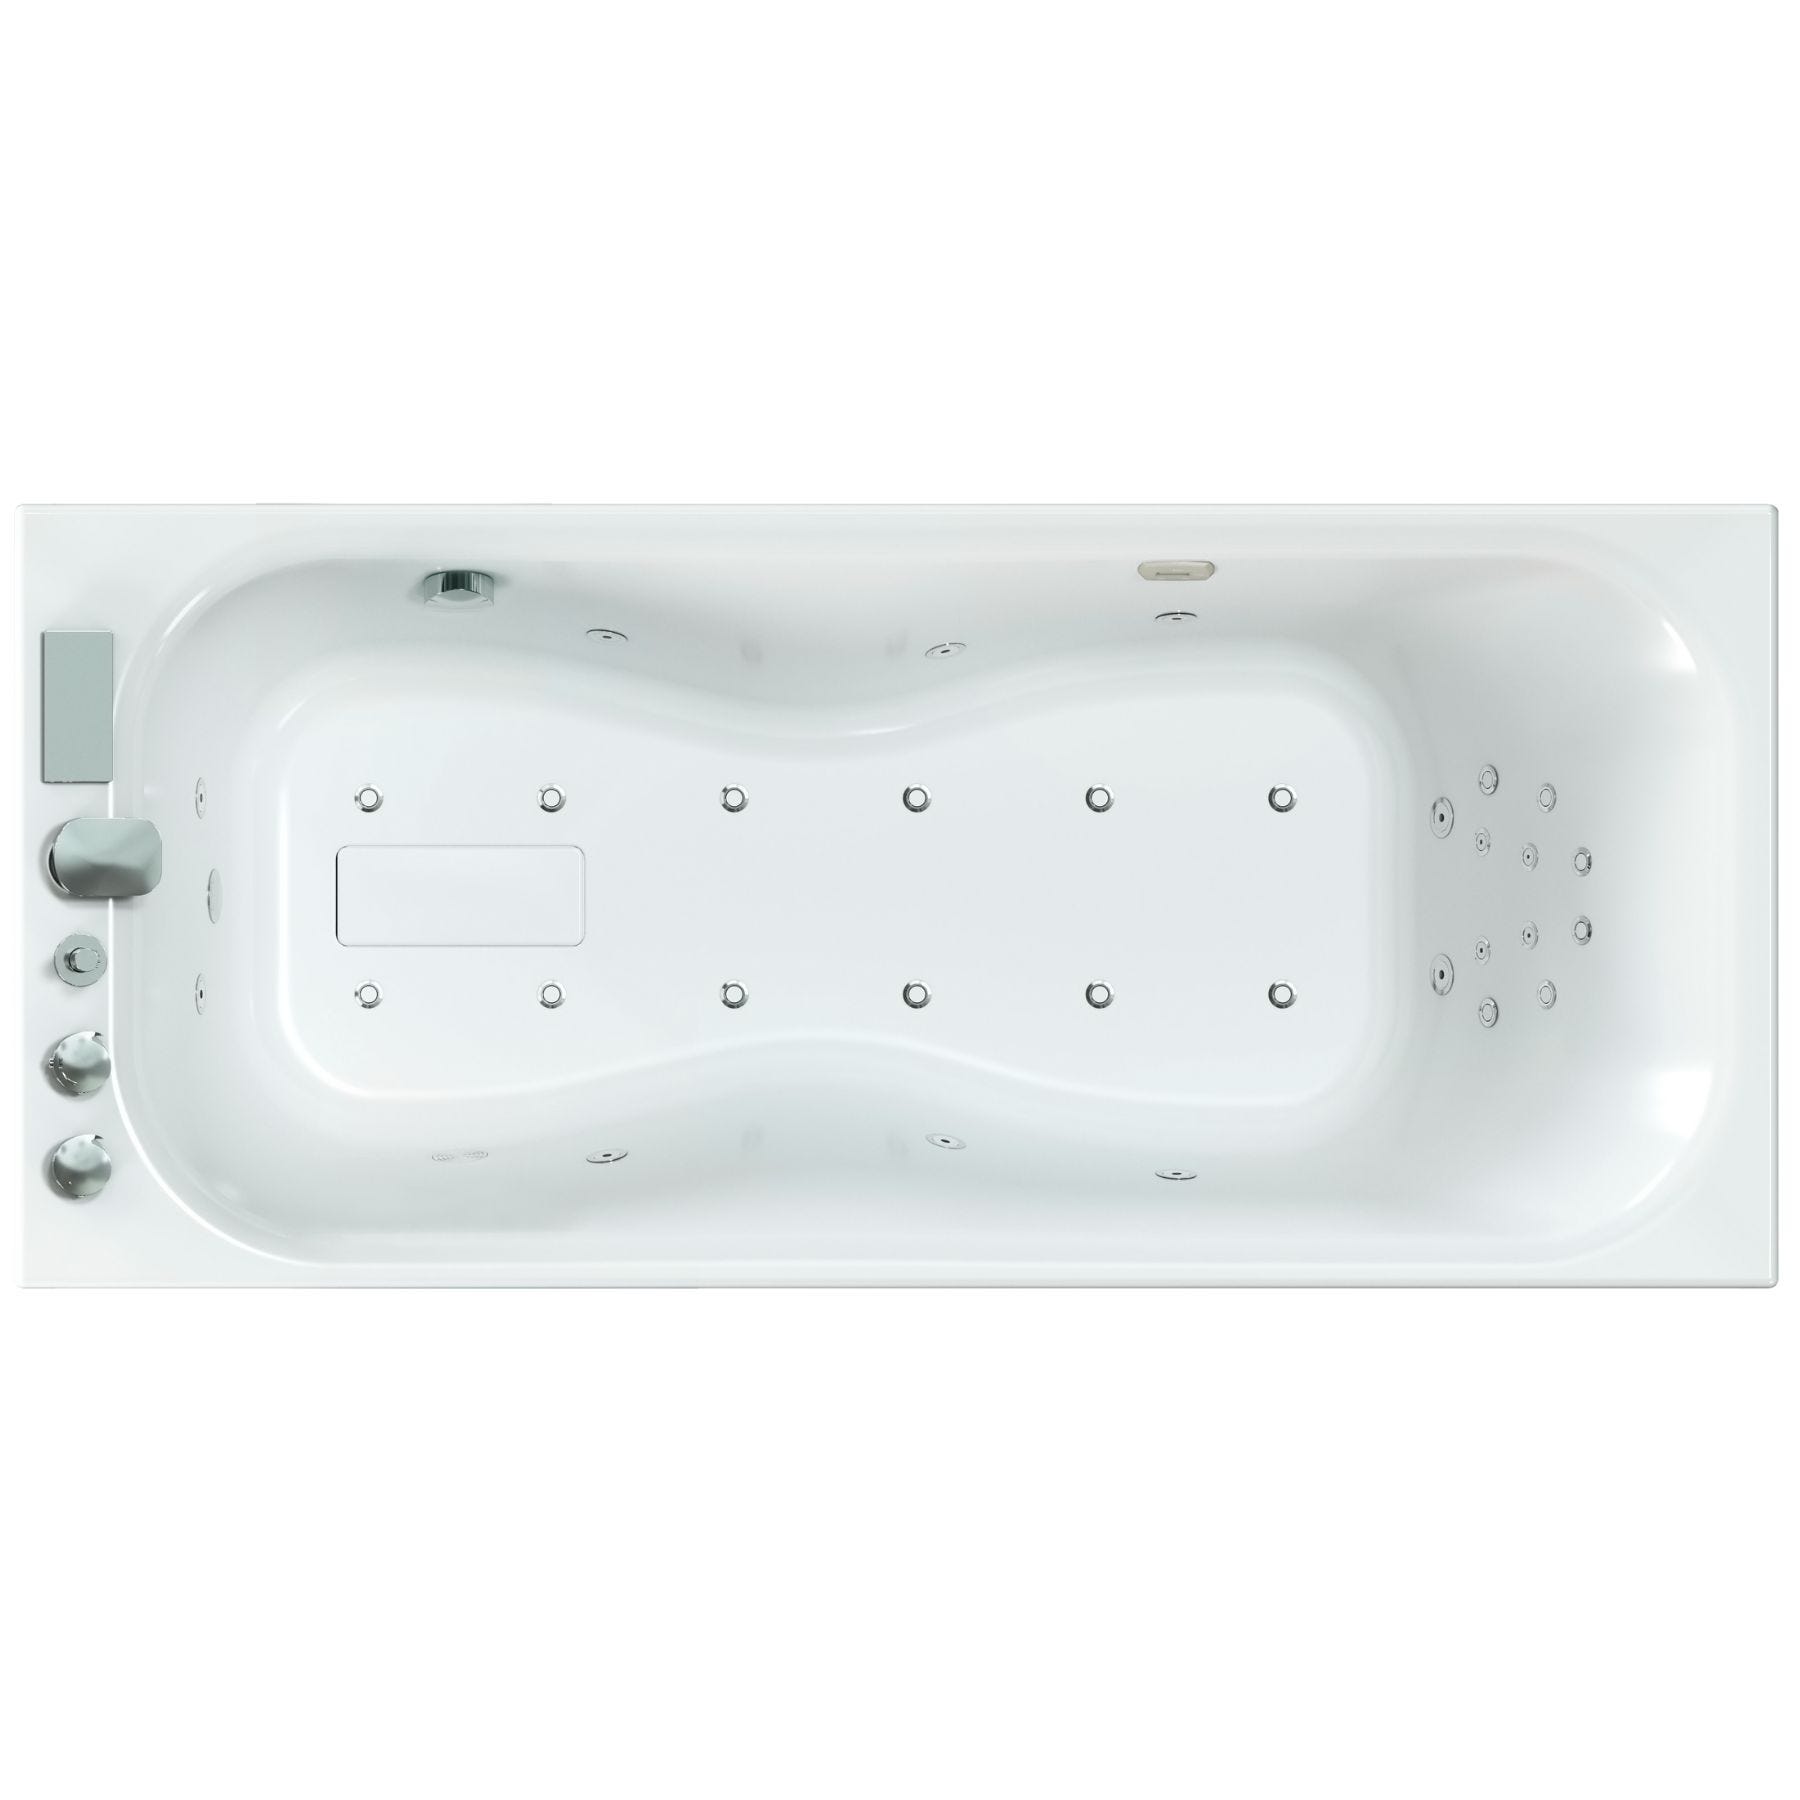 Baignoire balnéo ZUMBA 160x70 sur châssis métal, système balnéo SILENCE & AIR tête bain à droite finition blanche mat non brillante 1